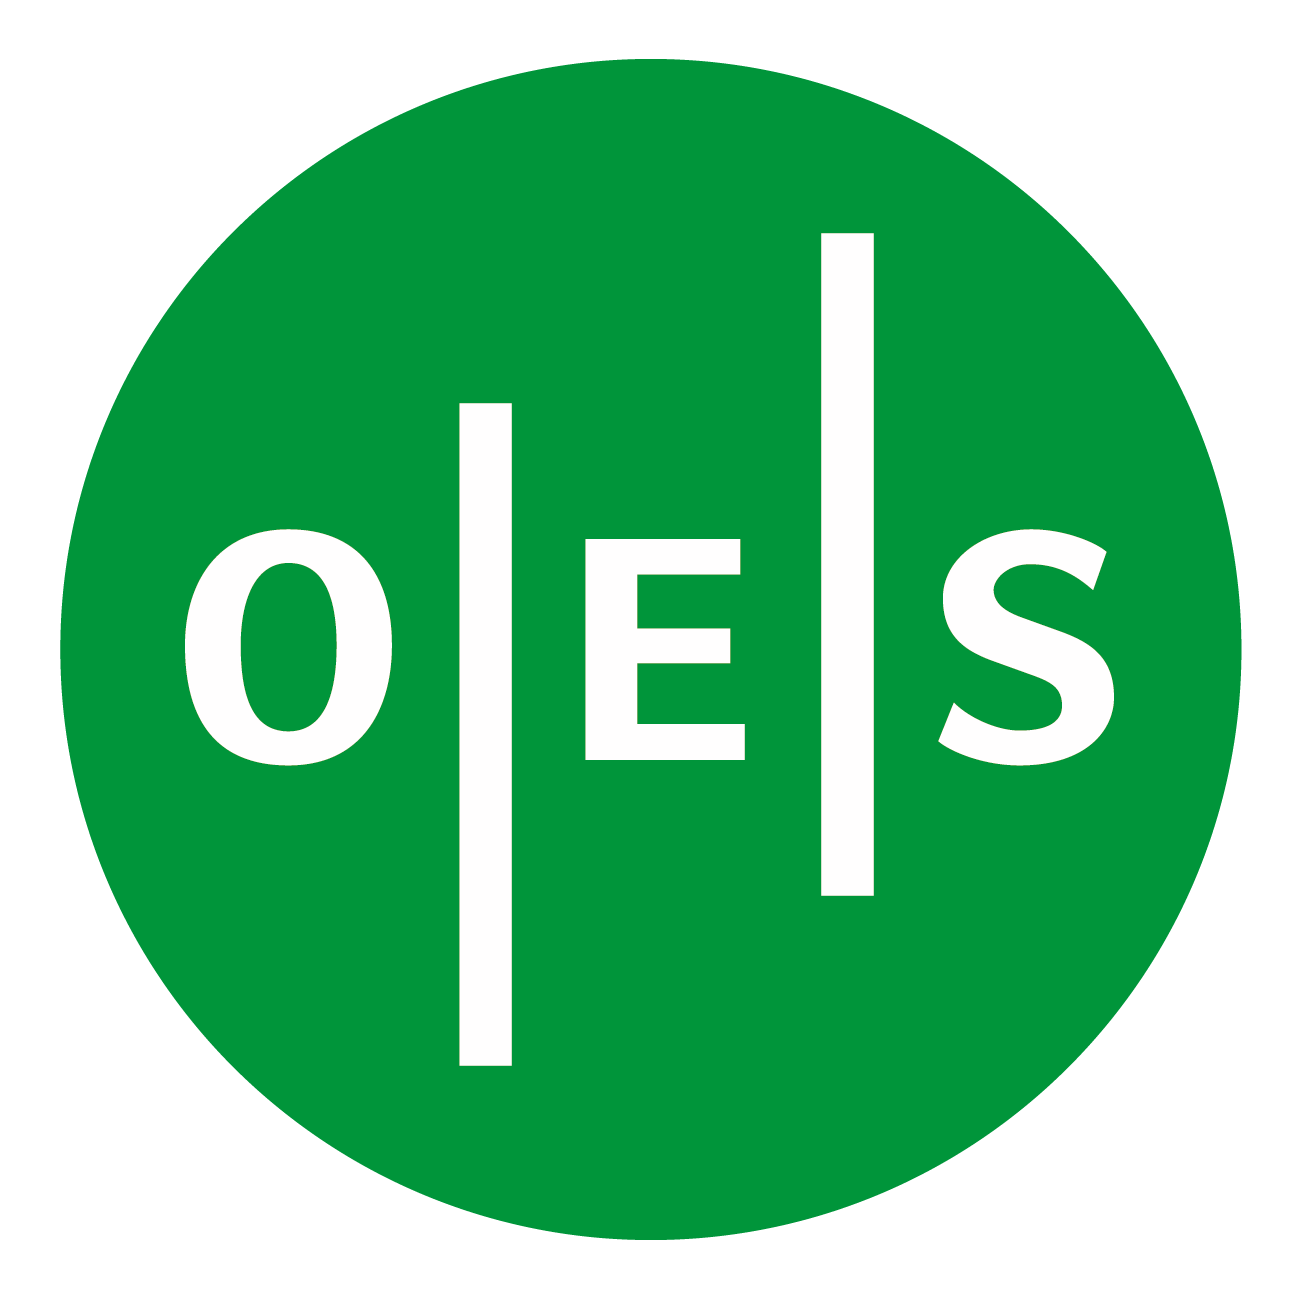 oes_logo_2020_rgb_green_3